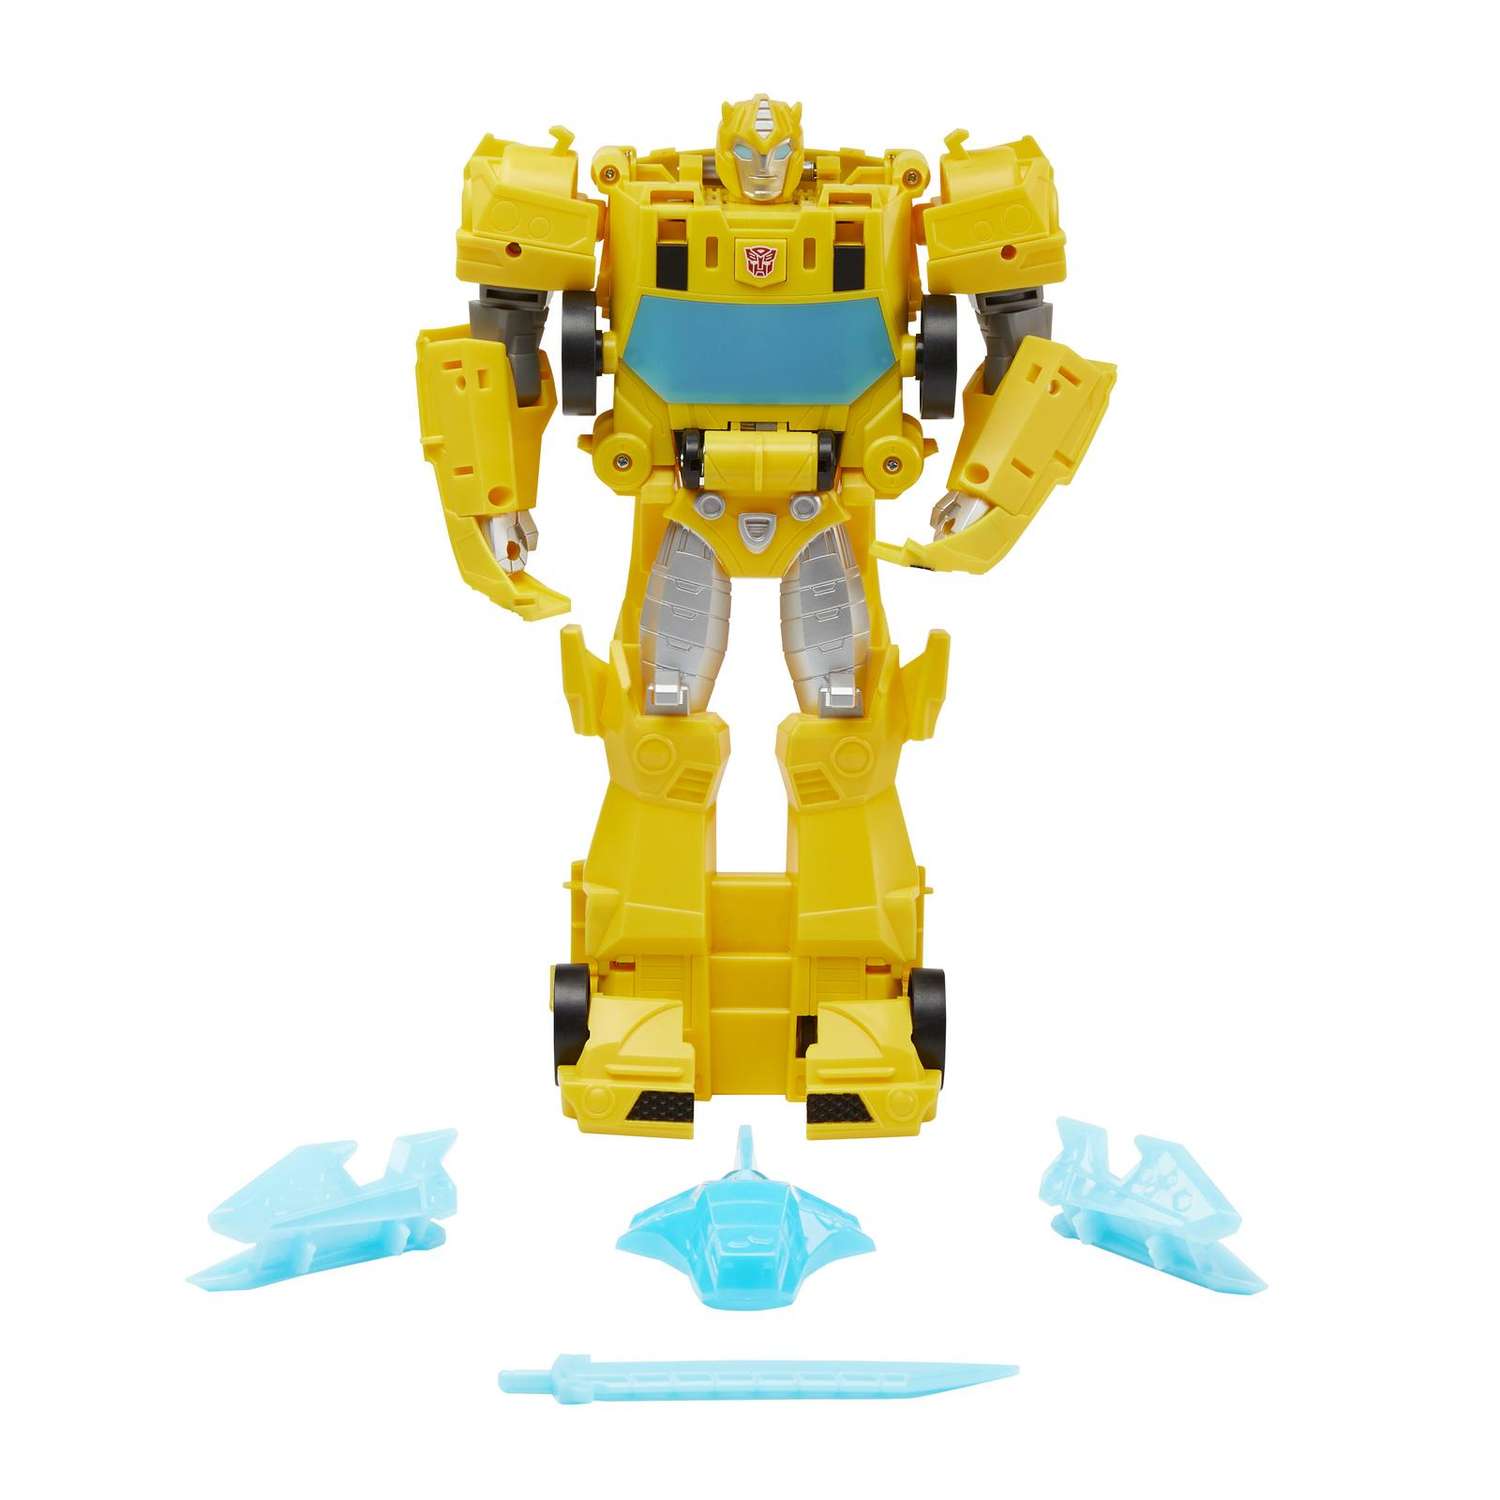 Фигурка Transformers Бамблби с автоматической трансформацией F27305X6 - фото 6